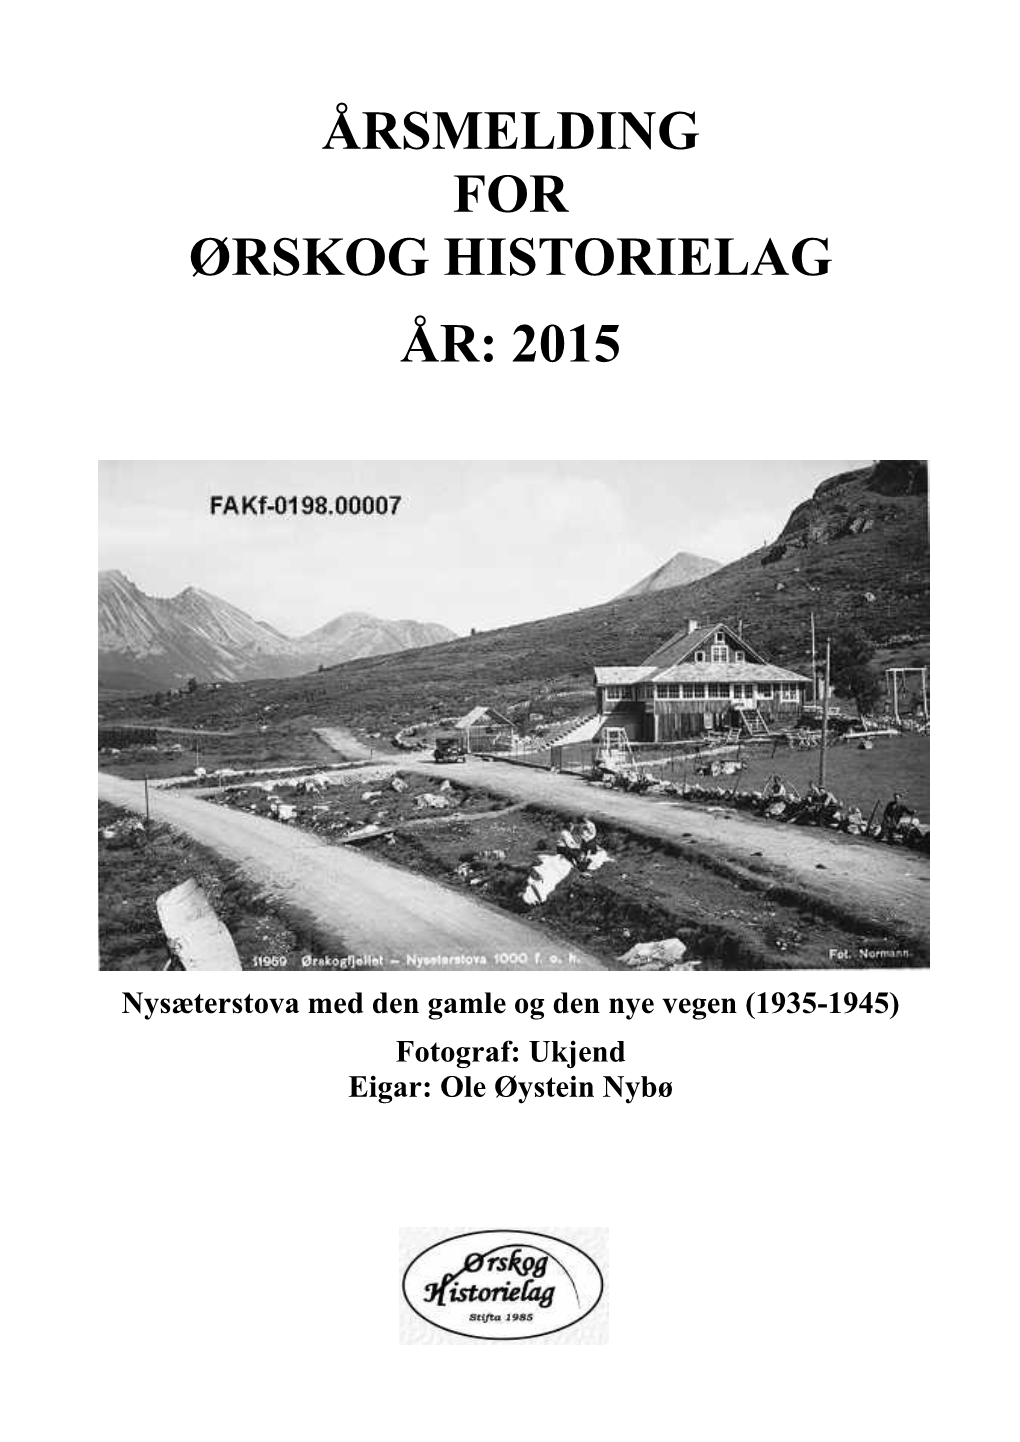 Årsmelding for Ørskog Historielag År: 2015